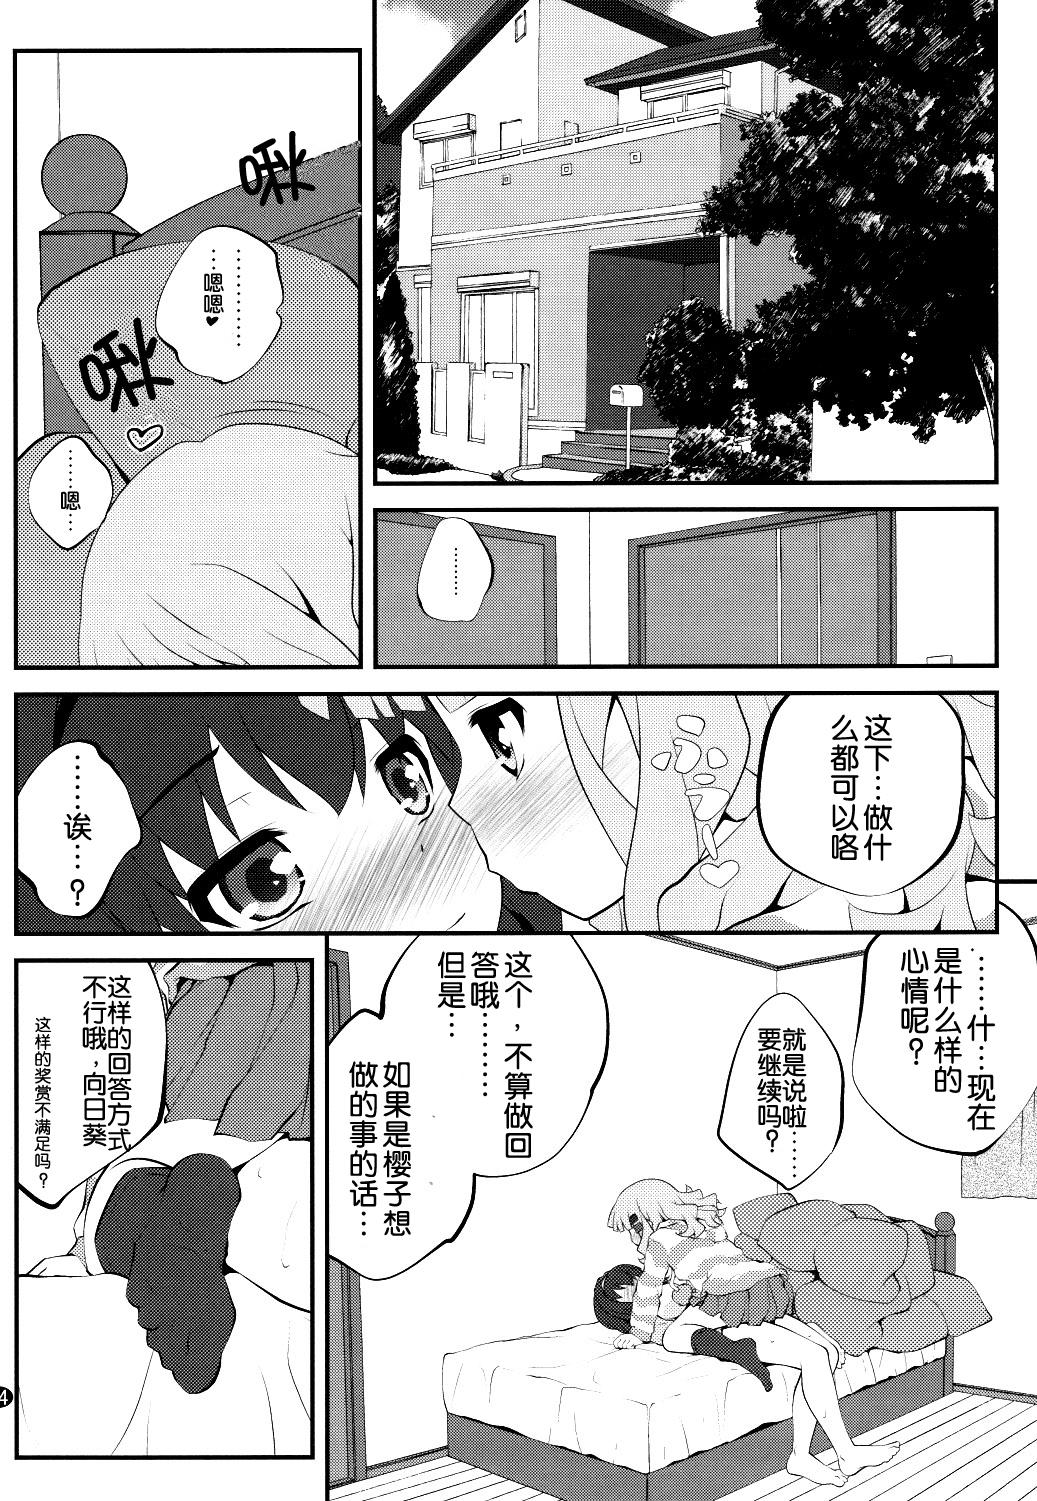 Assfucked Himegoto Flowers 7 - Yuruyuri Gay Military - Page 4